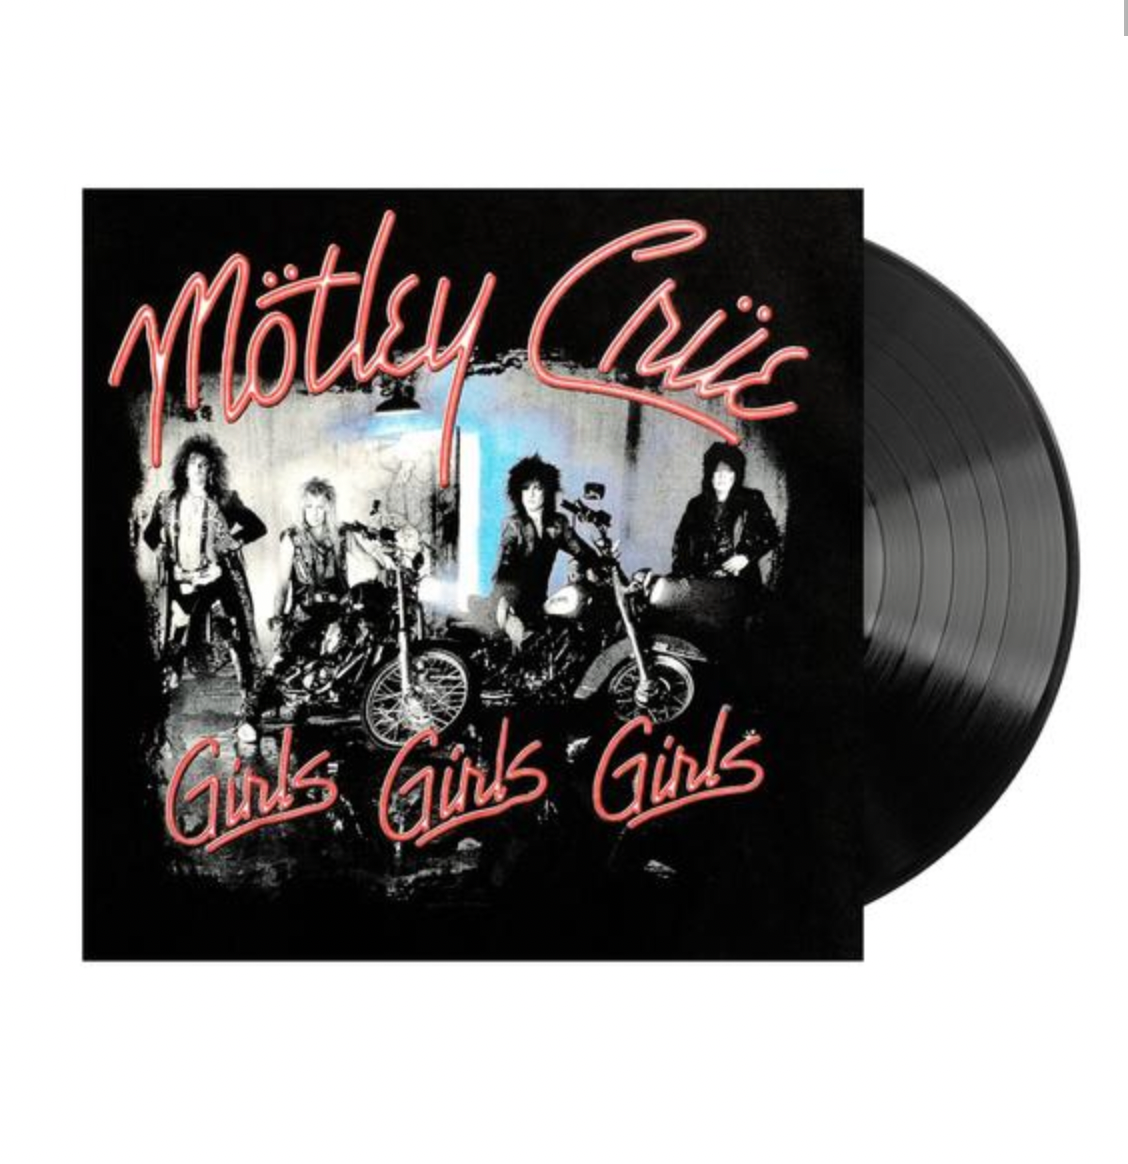 Mötley Crüe - Girls, Girls Girls